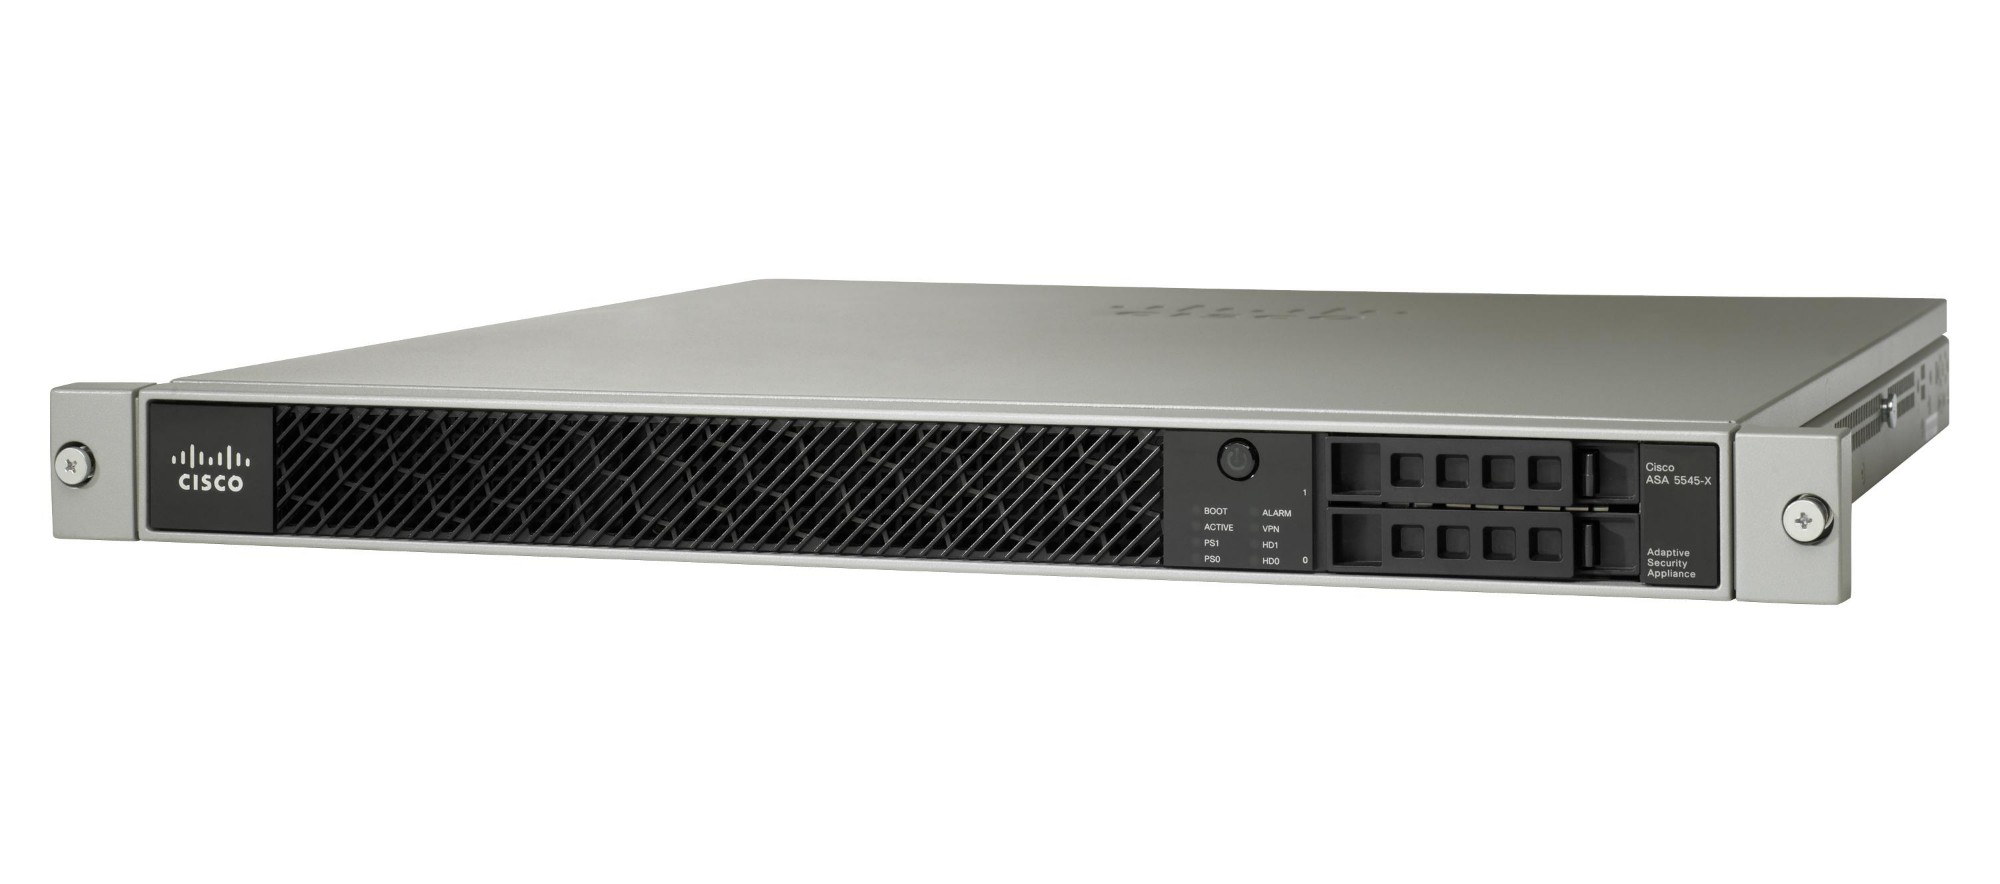 Cisco ASA5545-CU-2AC-K9 hardware firewall 1U 1000 Mbit/s